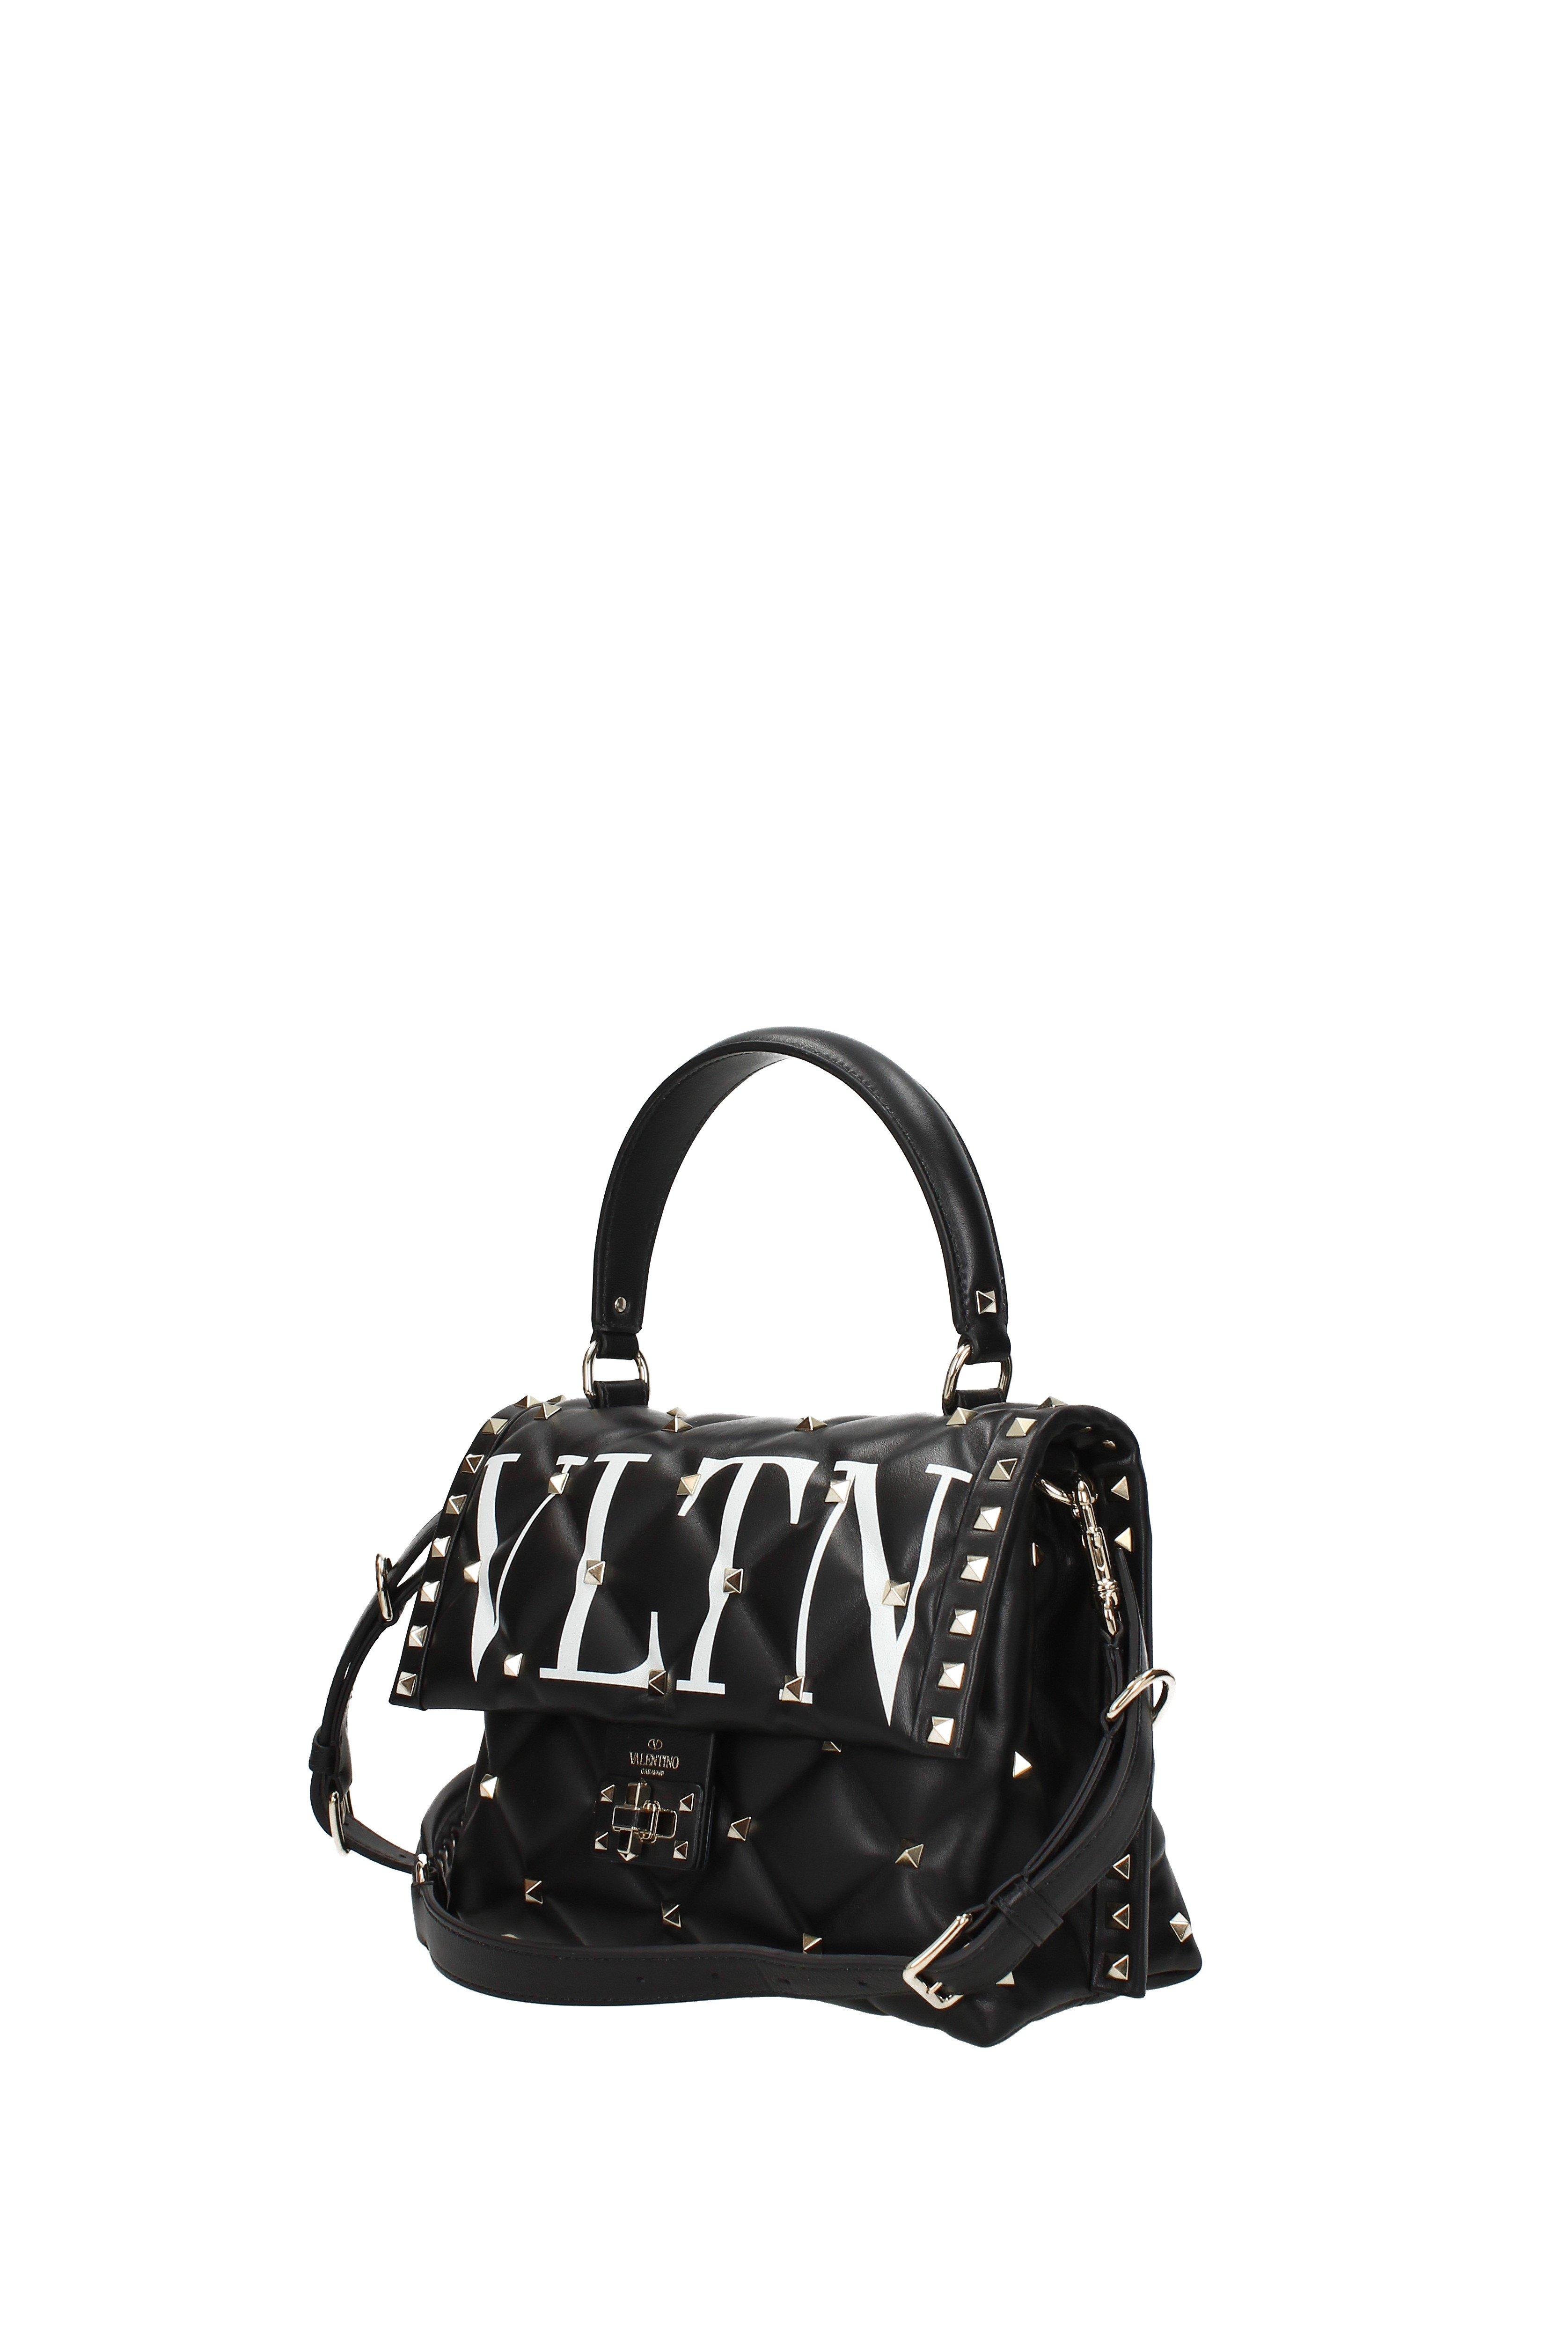 Valentino Handbags Women Black in Black - Lyst